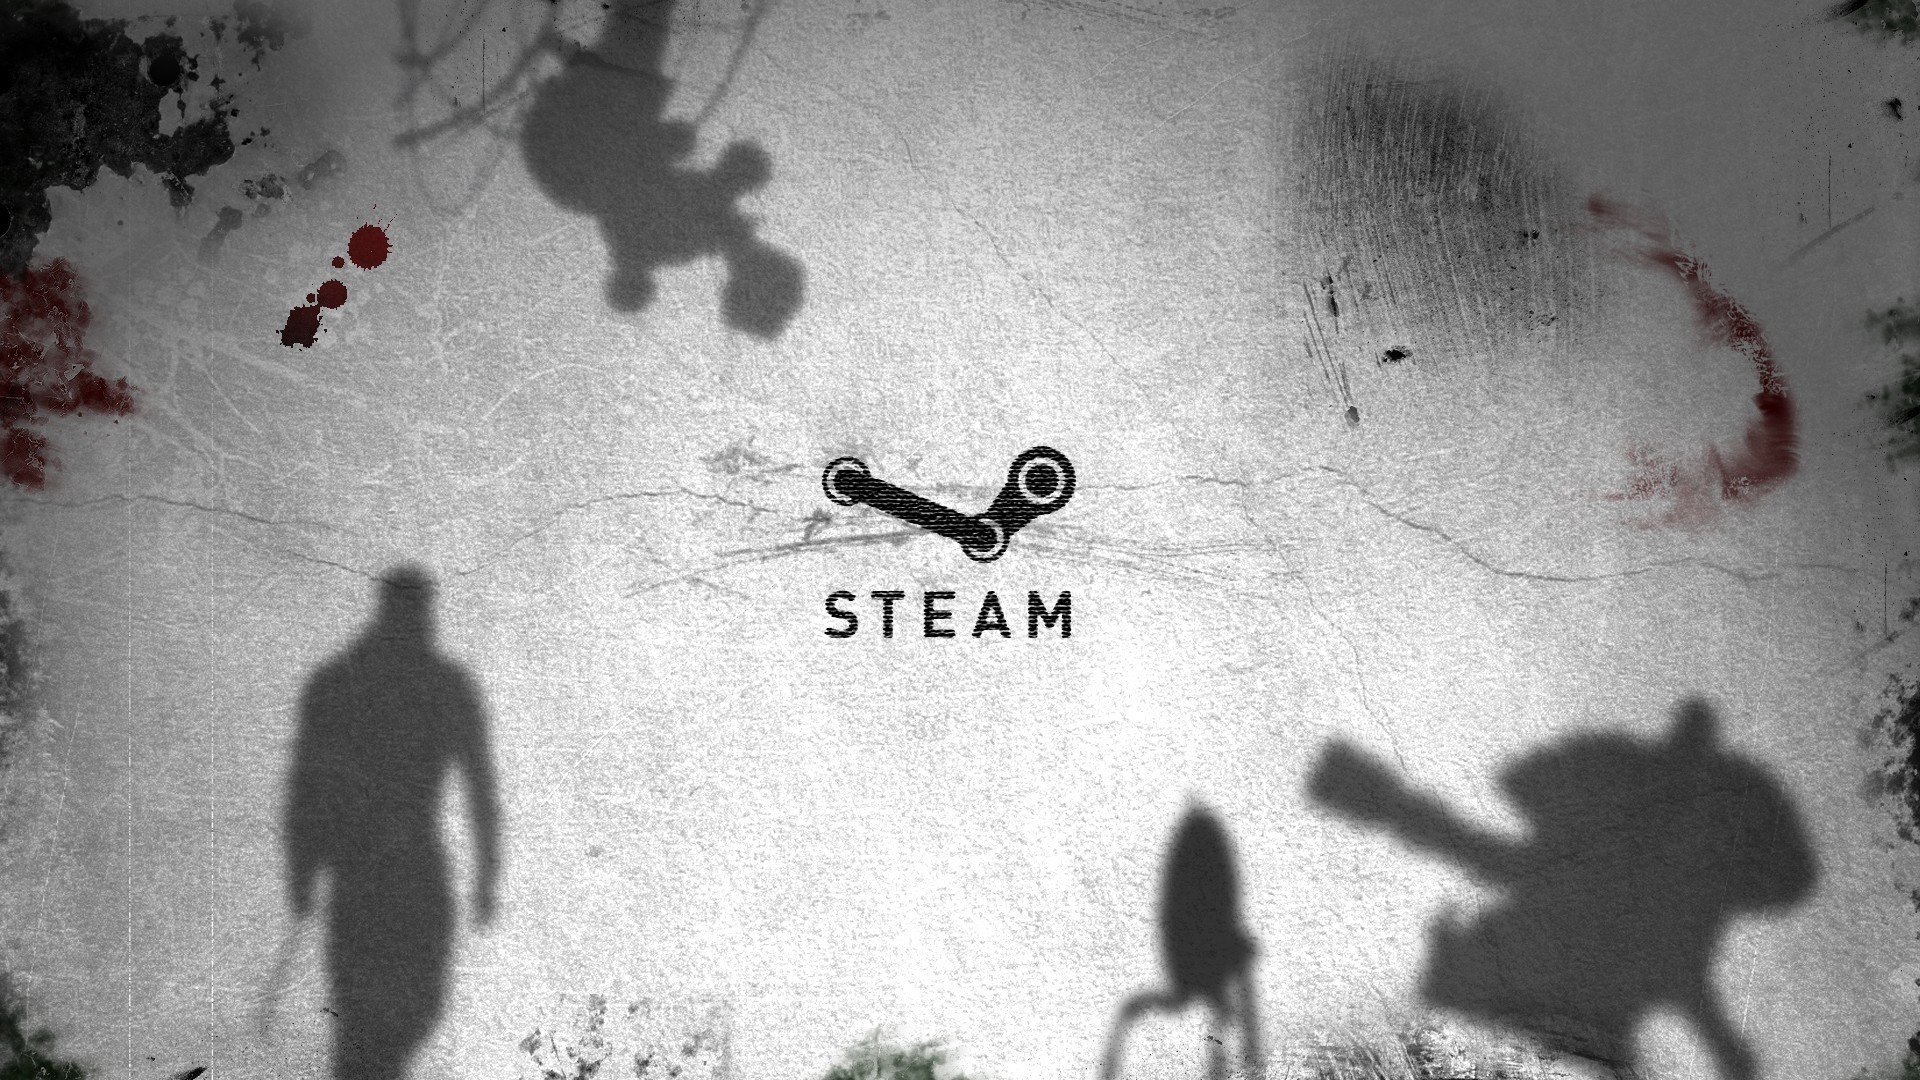 Valve, Valve Corporation, Half Life, Portal, Team Fortress - Steam Wallpapers Hd - HD Wallpaper 